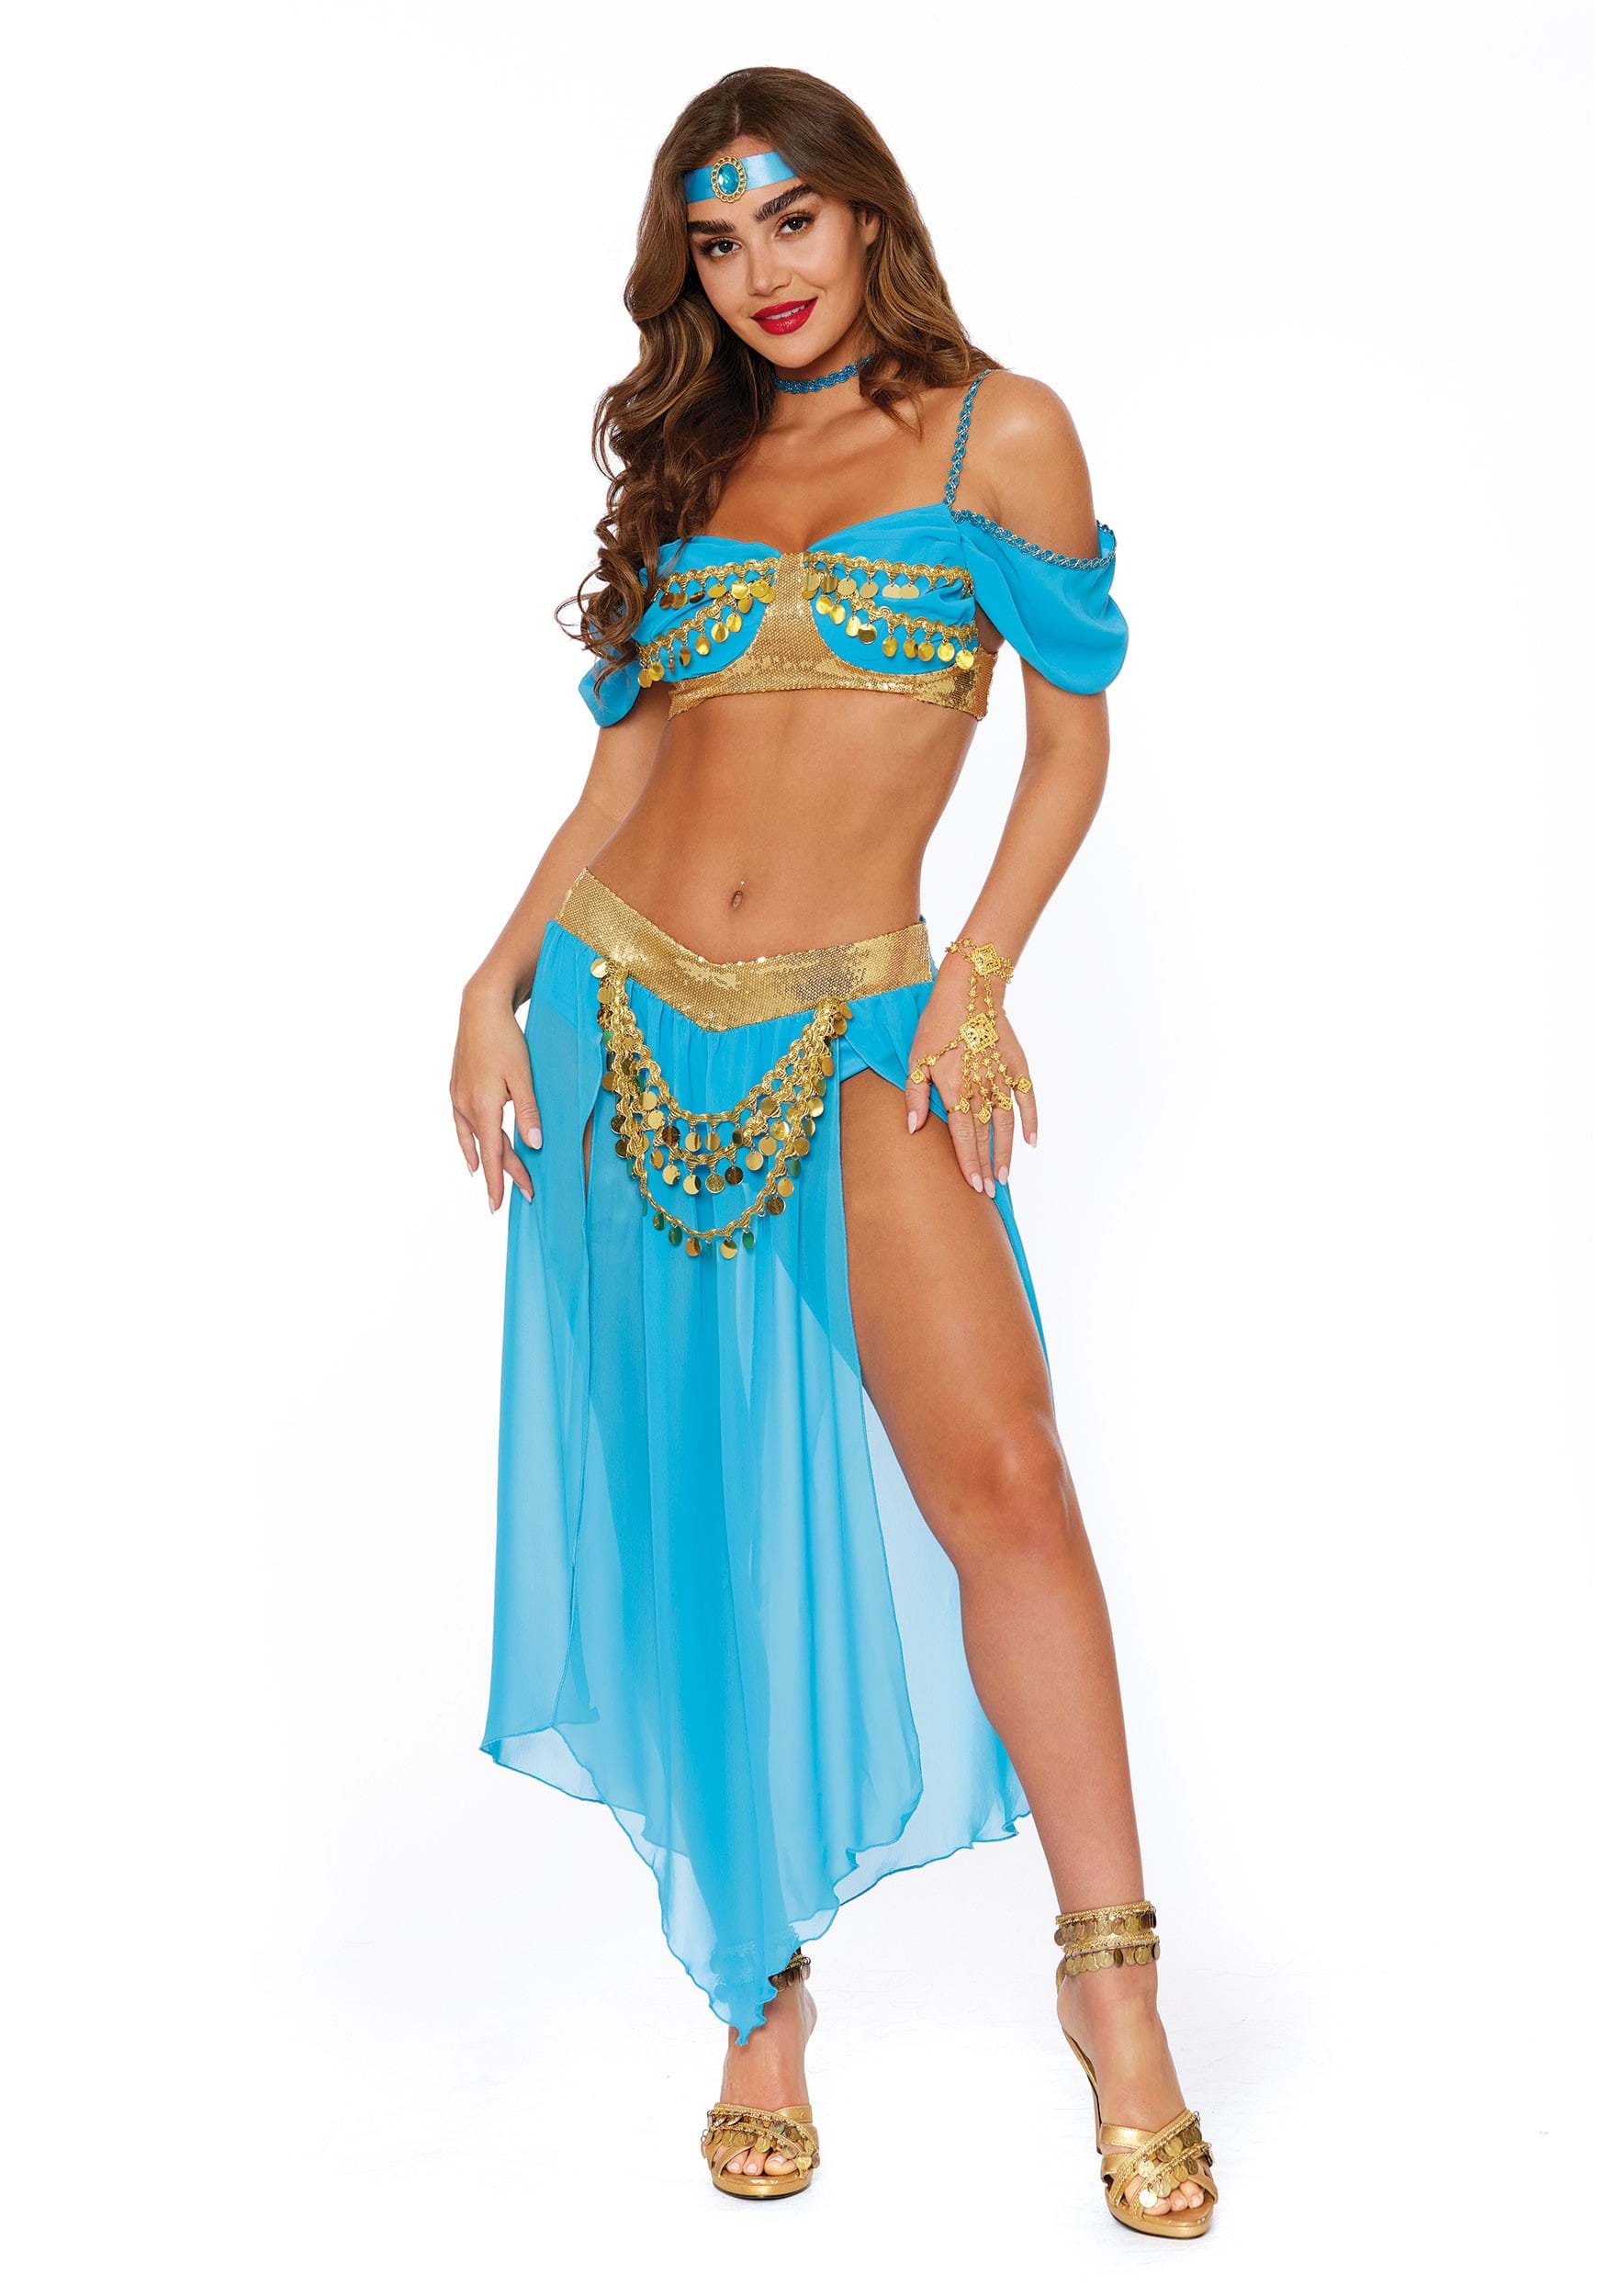 19 Genie costume ideas  genie costume, belly dancer costumes